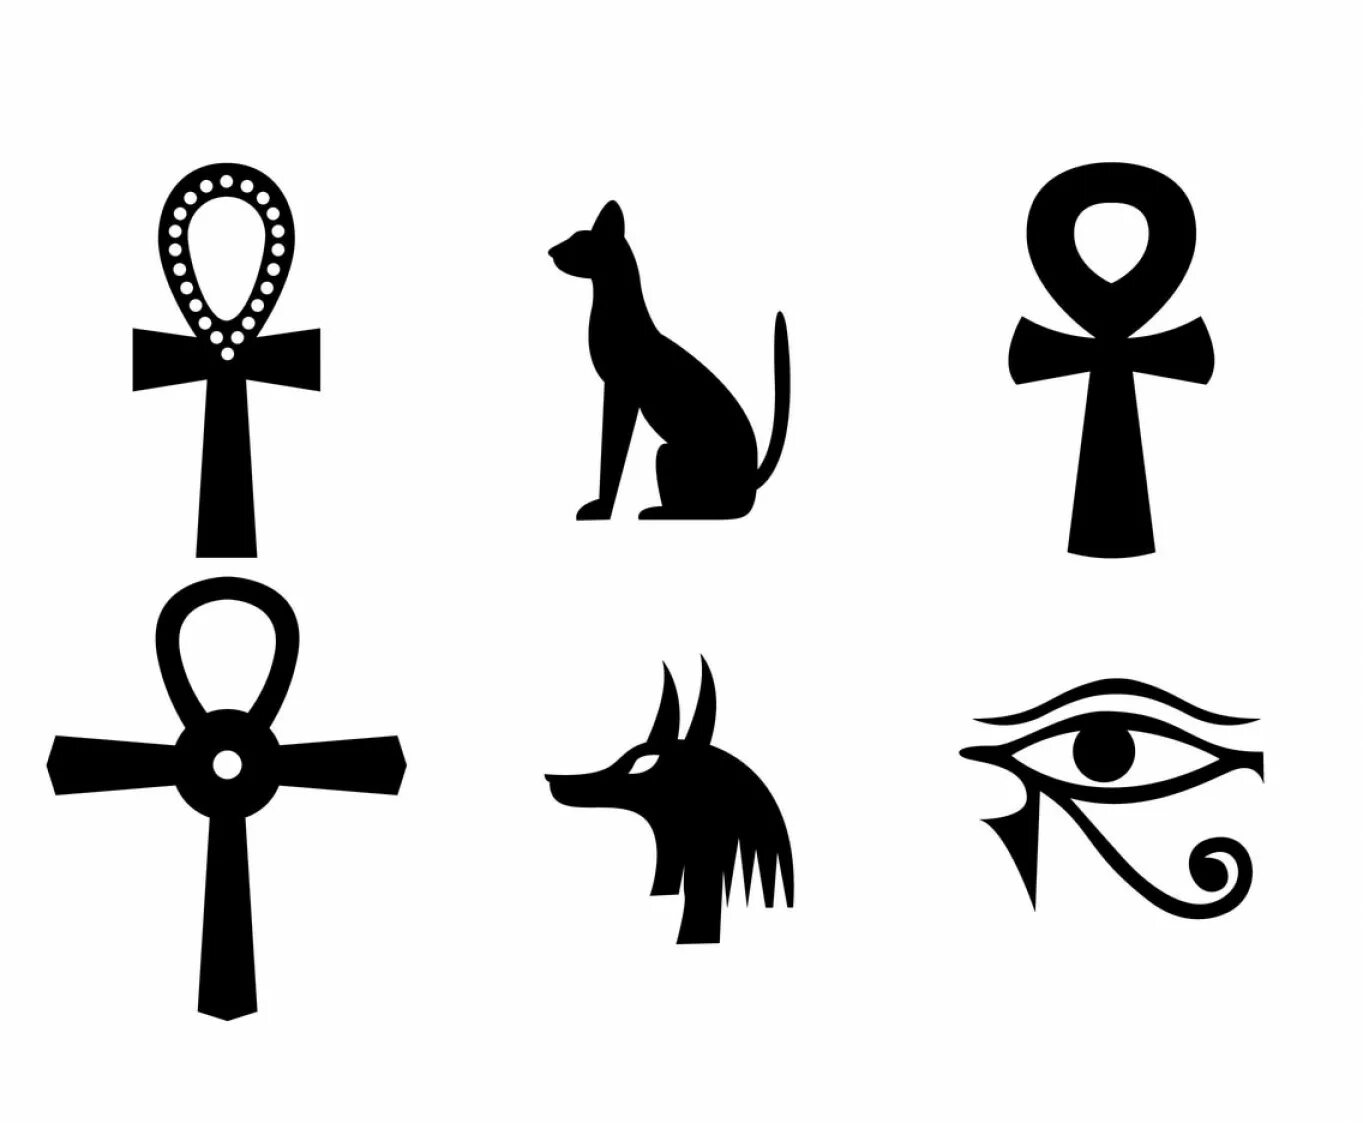 Символы Египта анкх. Египетский крест анкх эскиз. Тату Египет анкх. Анх Египетский символ рисунок. Символы древних стран